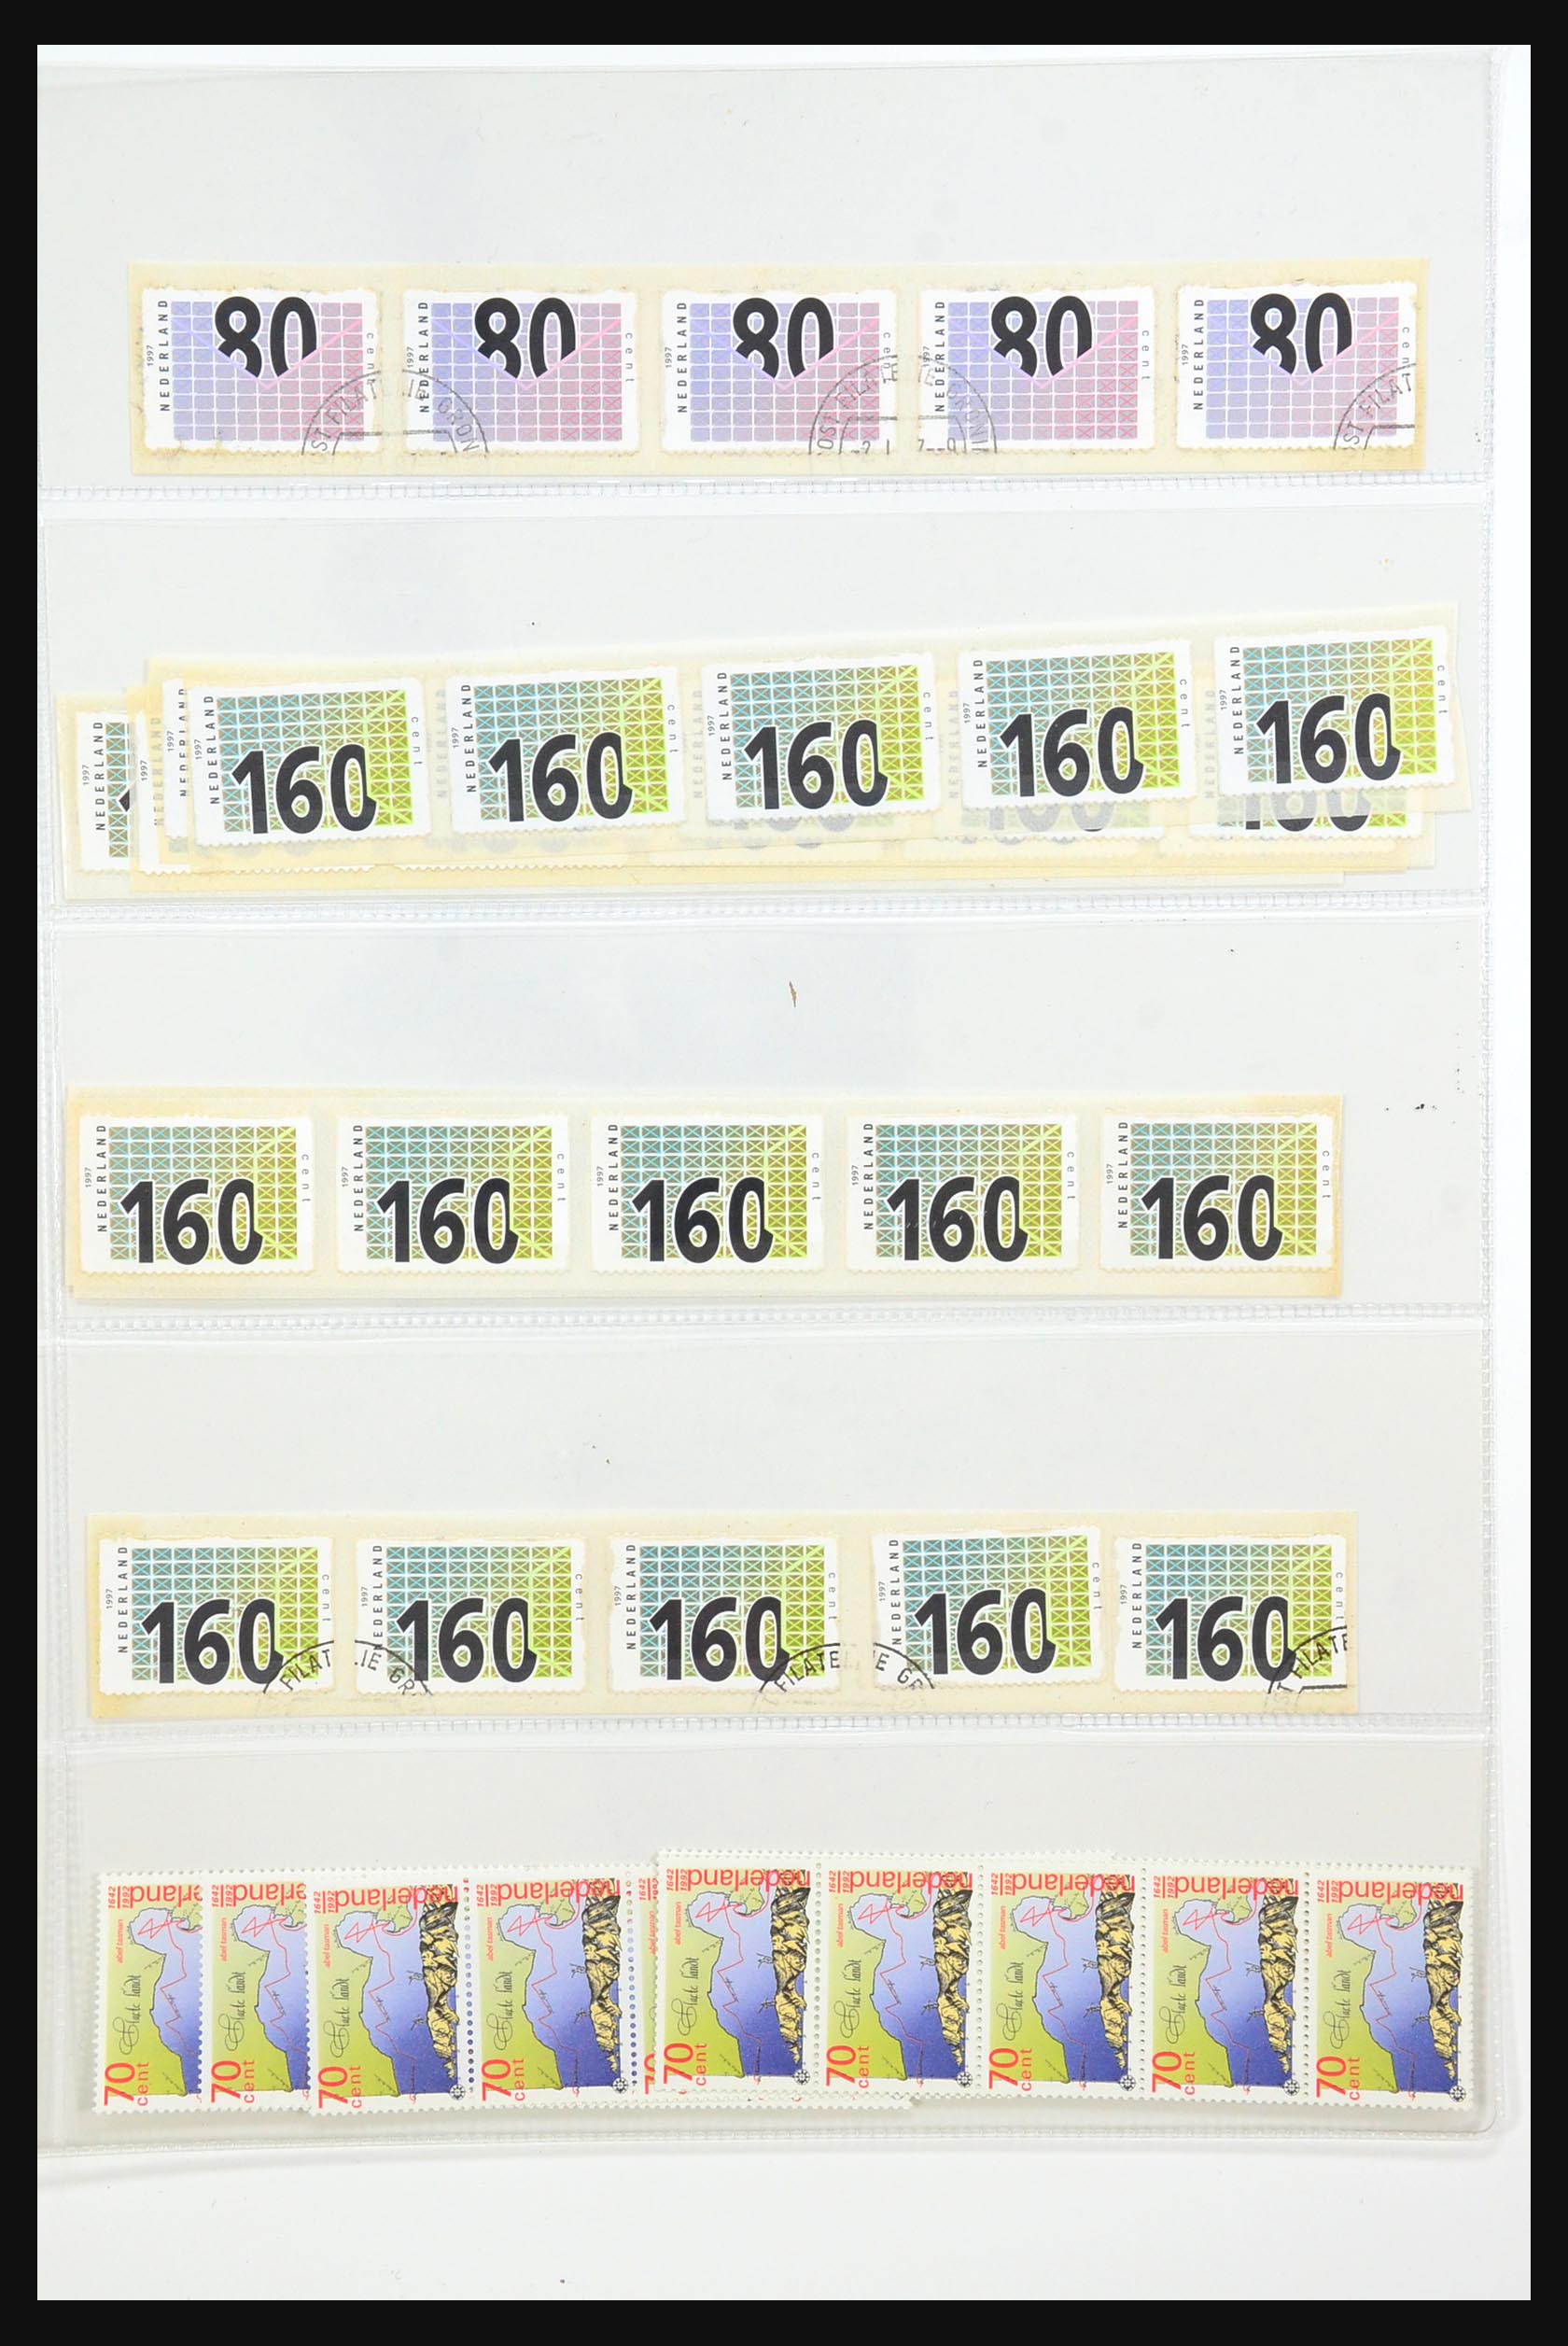 31463 045 - 31463 Nederland rolzegels 1953-1998.